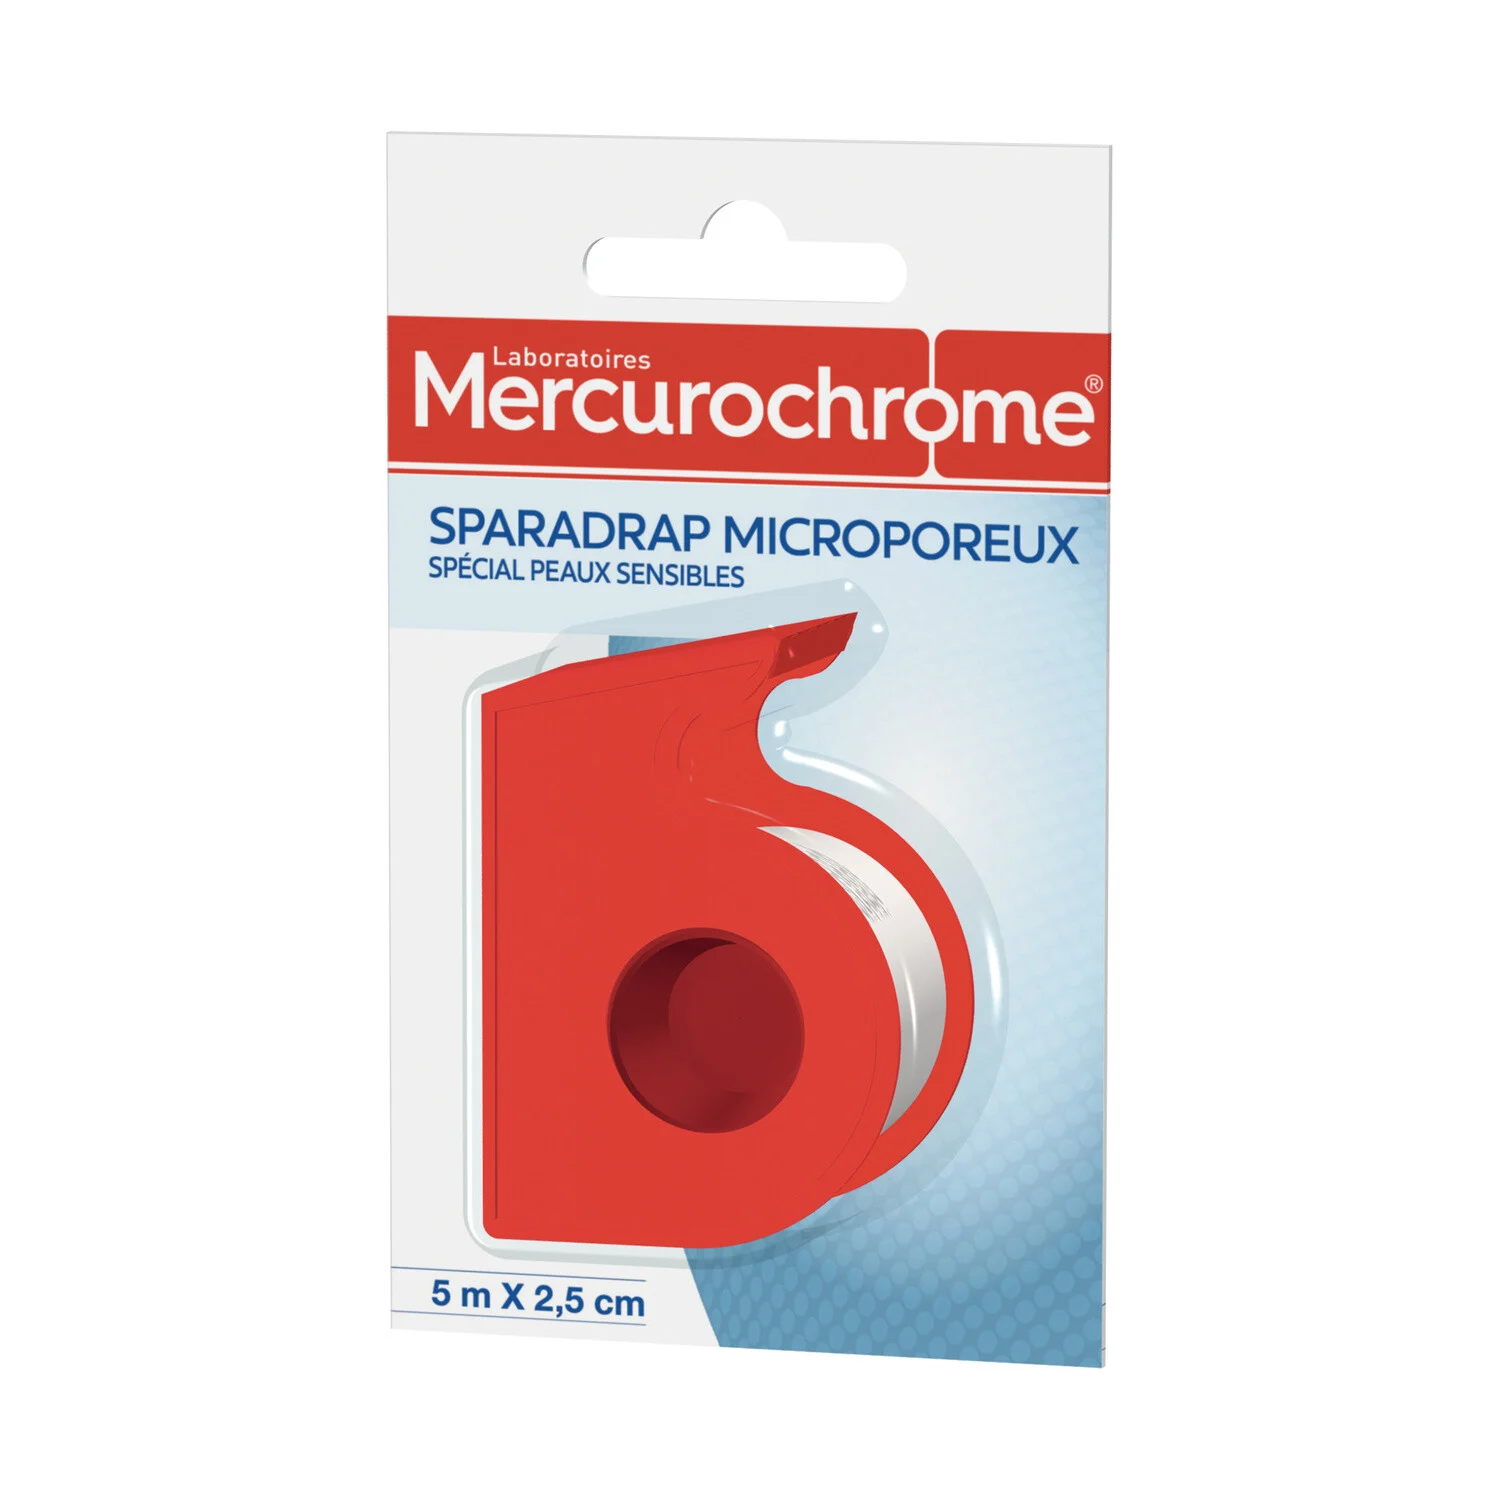 Sparadrap Microporeux - Mercurochrome